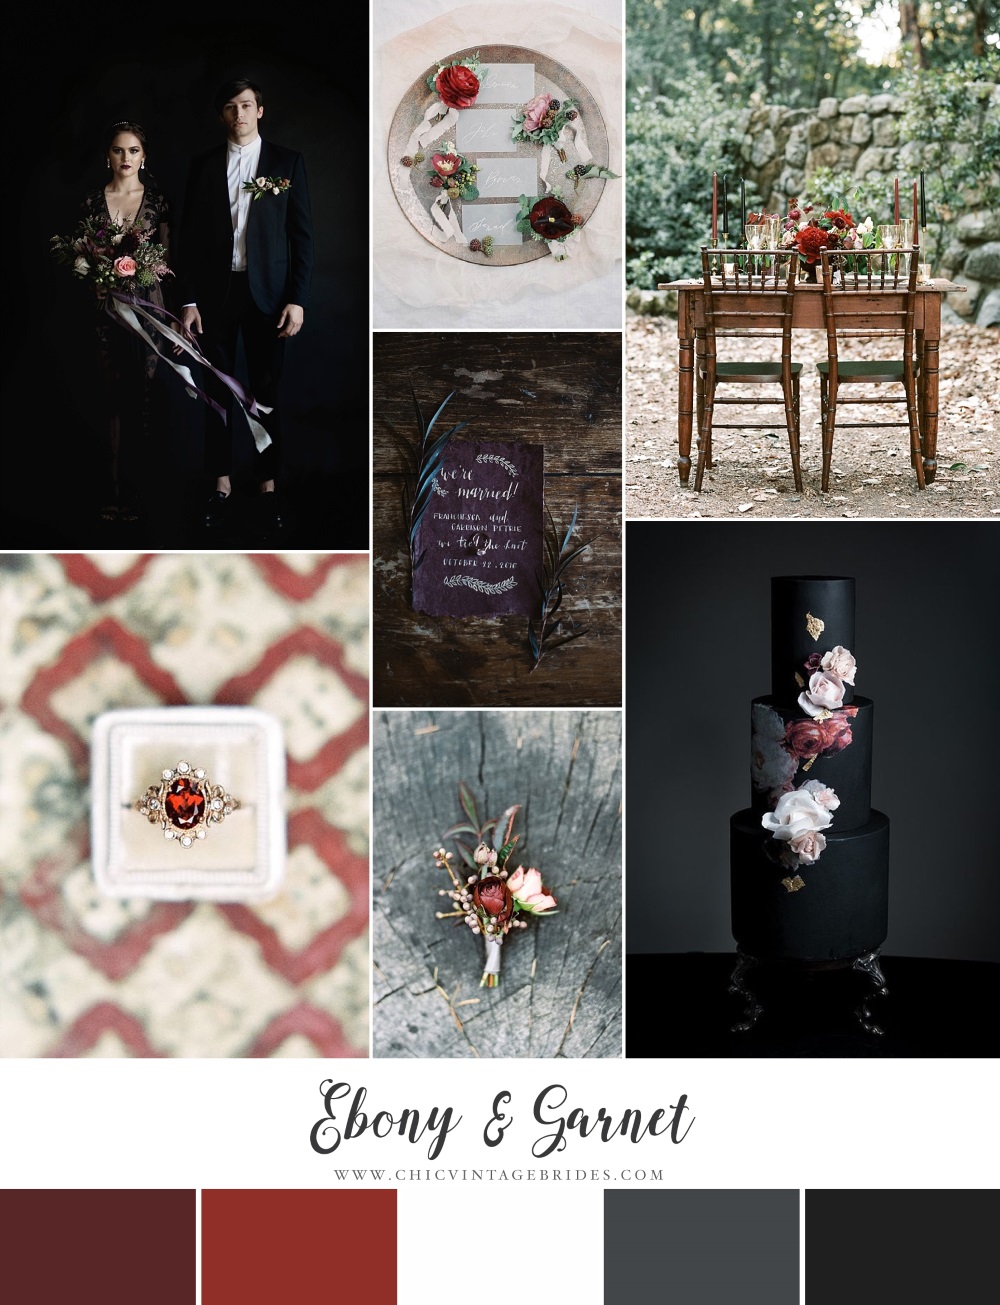 Ebony & Garnet - Halloween Wedding Inspiration Board